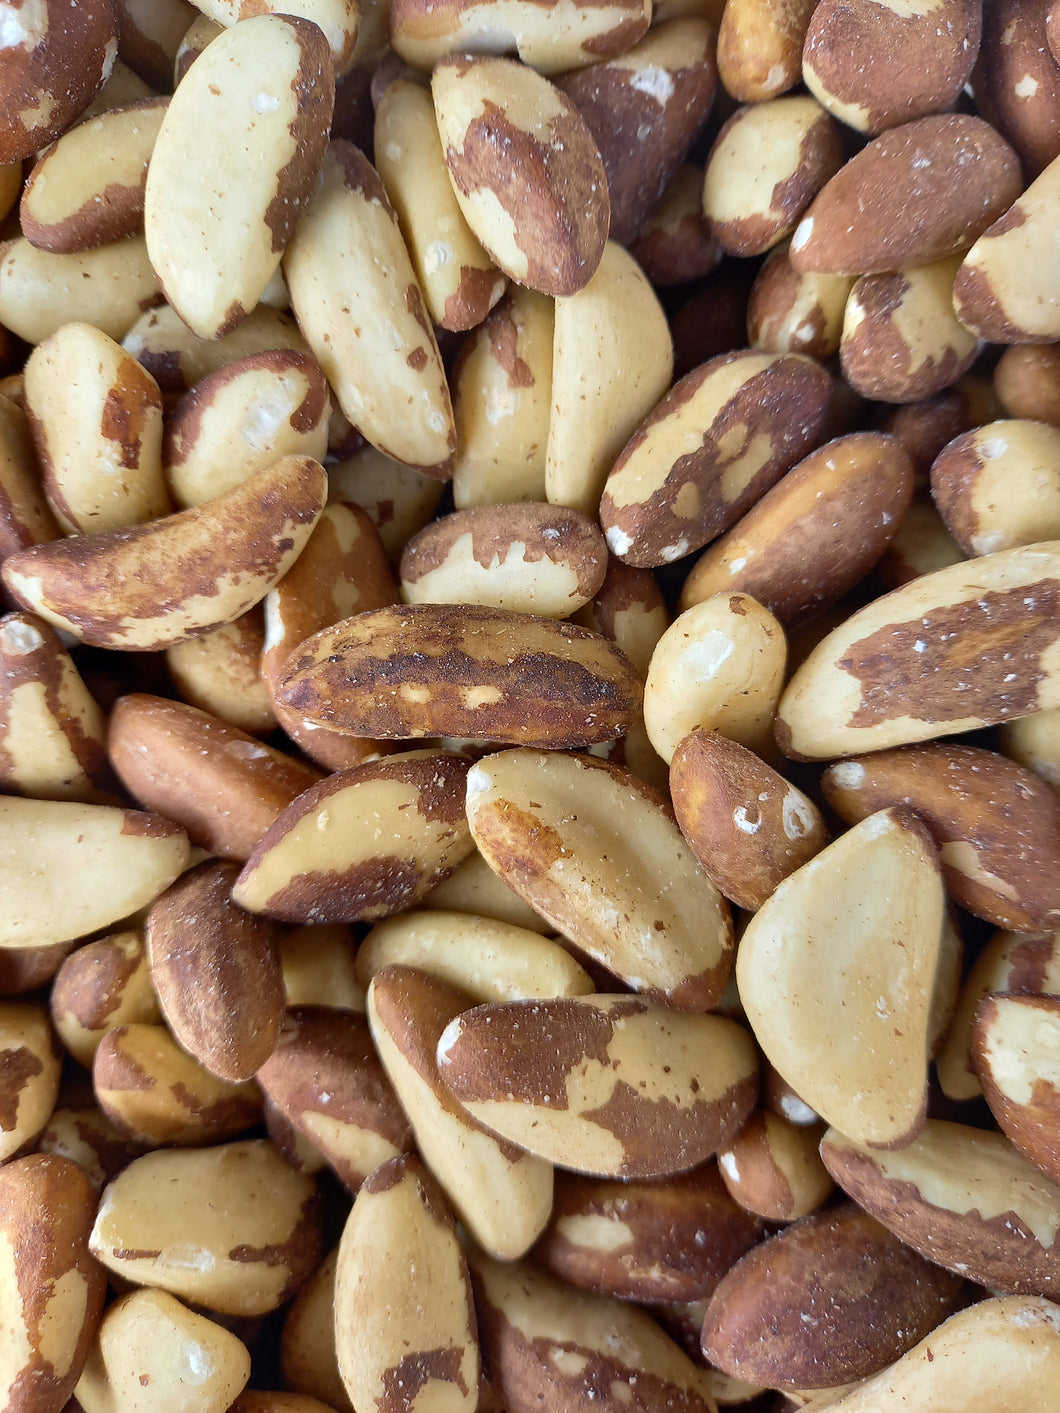 Brazil nuts - whole